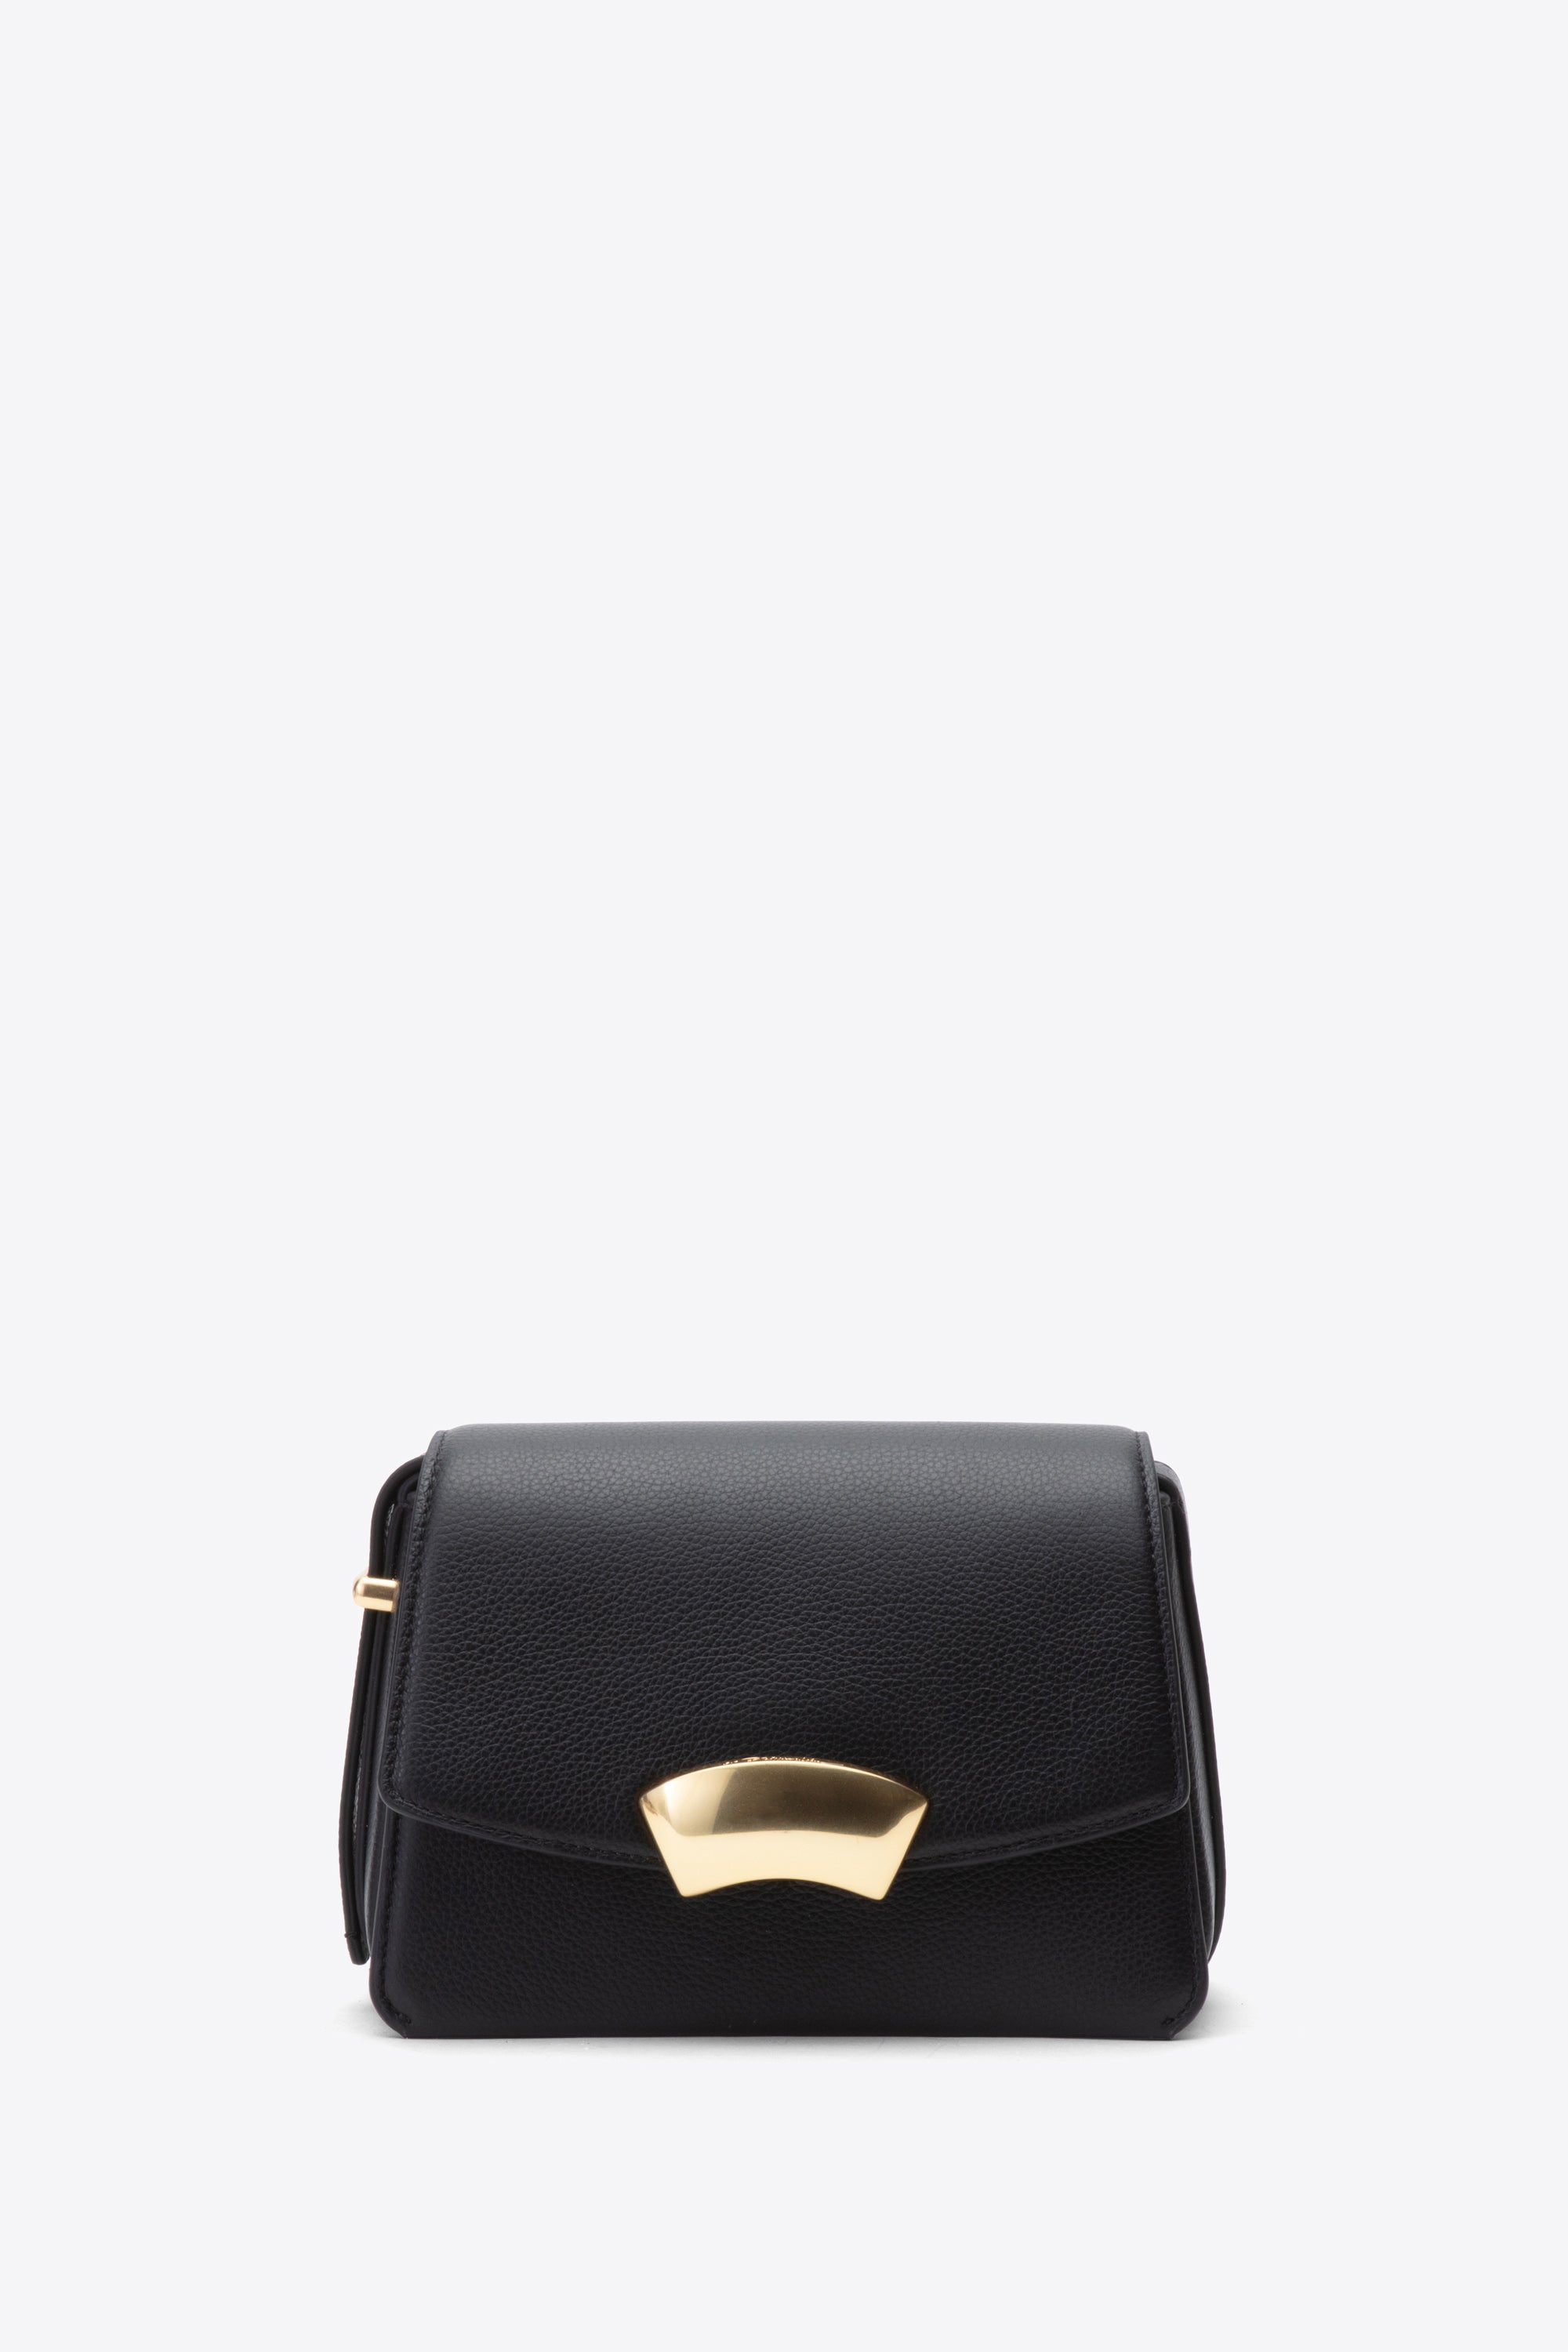 Women's Designer Handbags u0026 Small Leather Goods | 3.1 ...